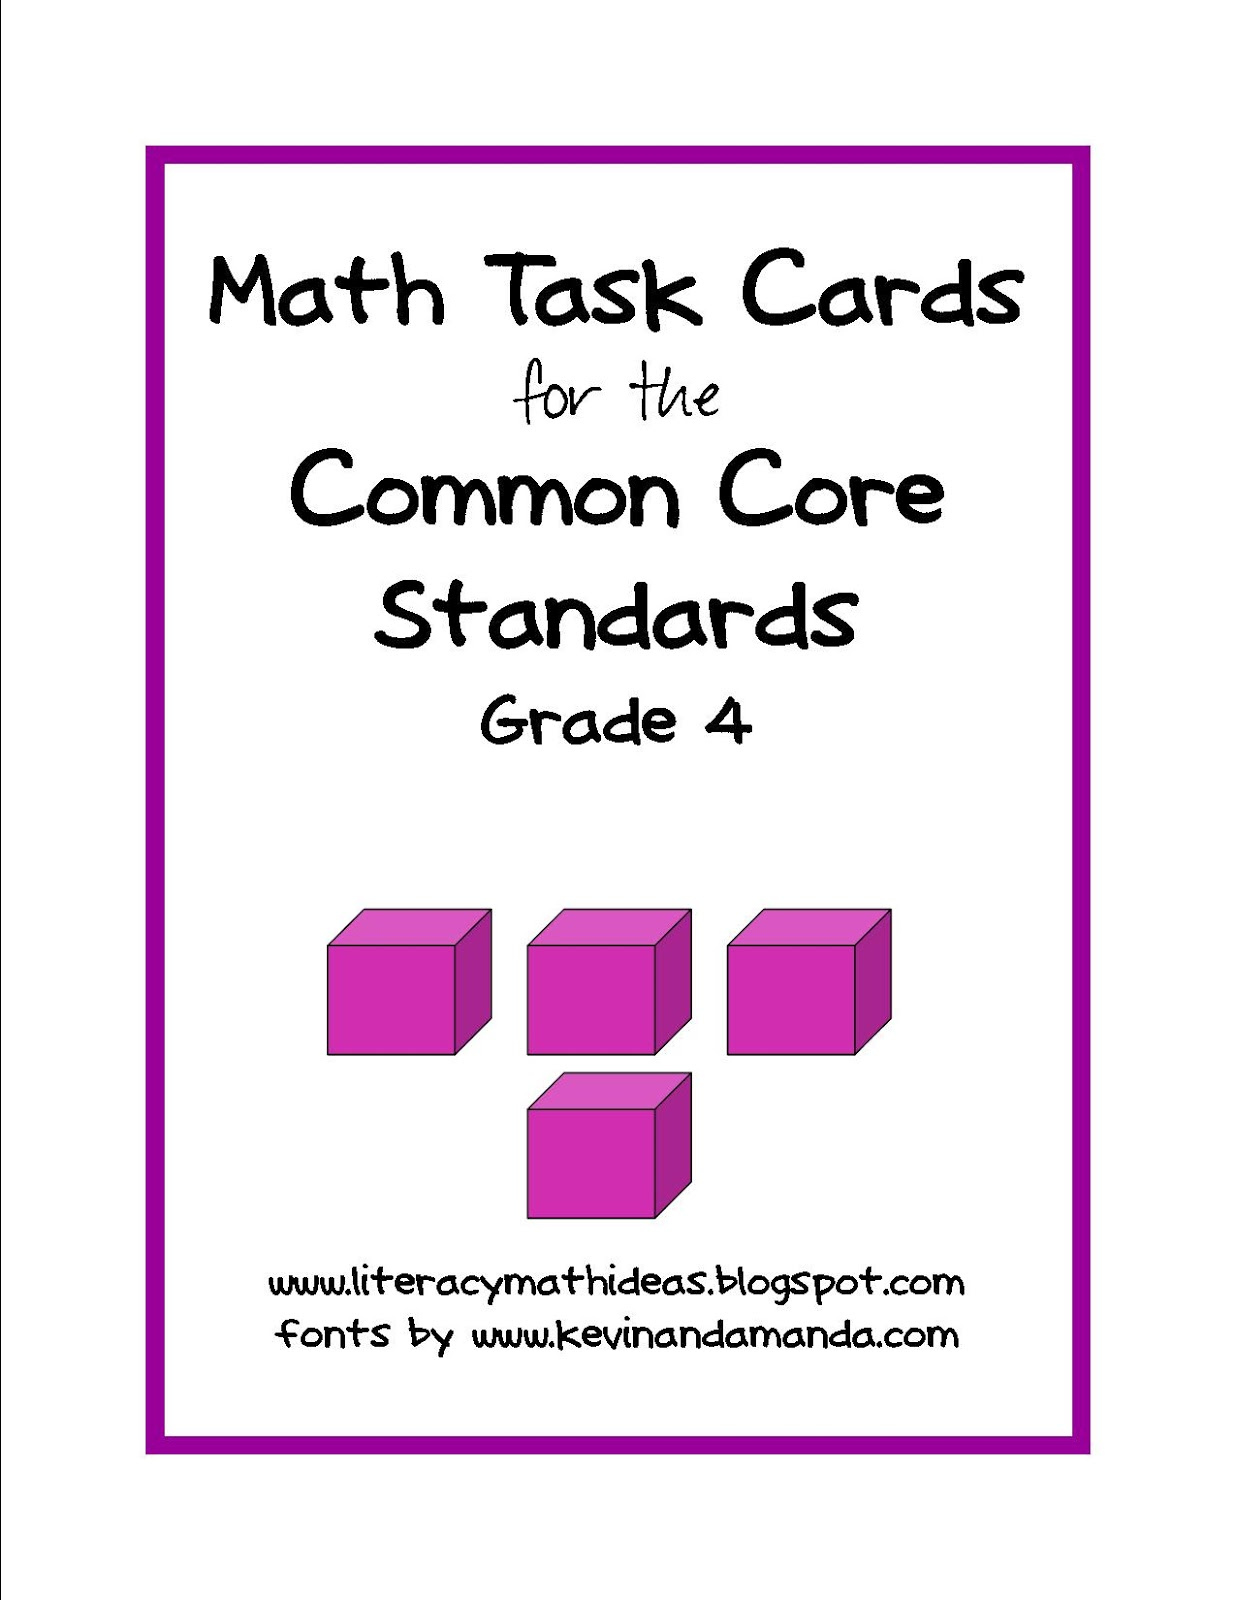 Literacy Math Ideas Math Grade 4 Common Core Task Cards 